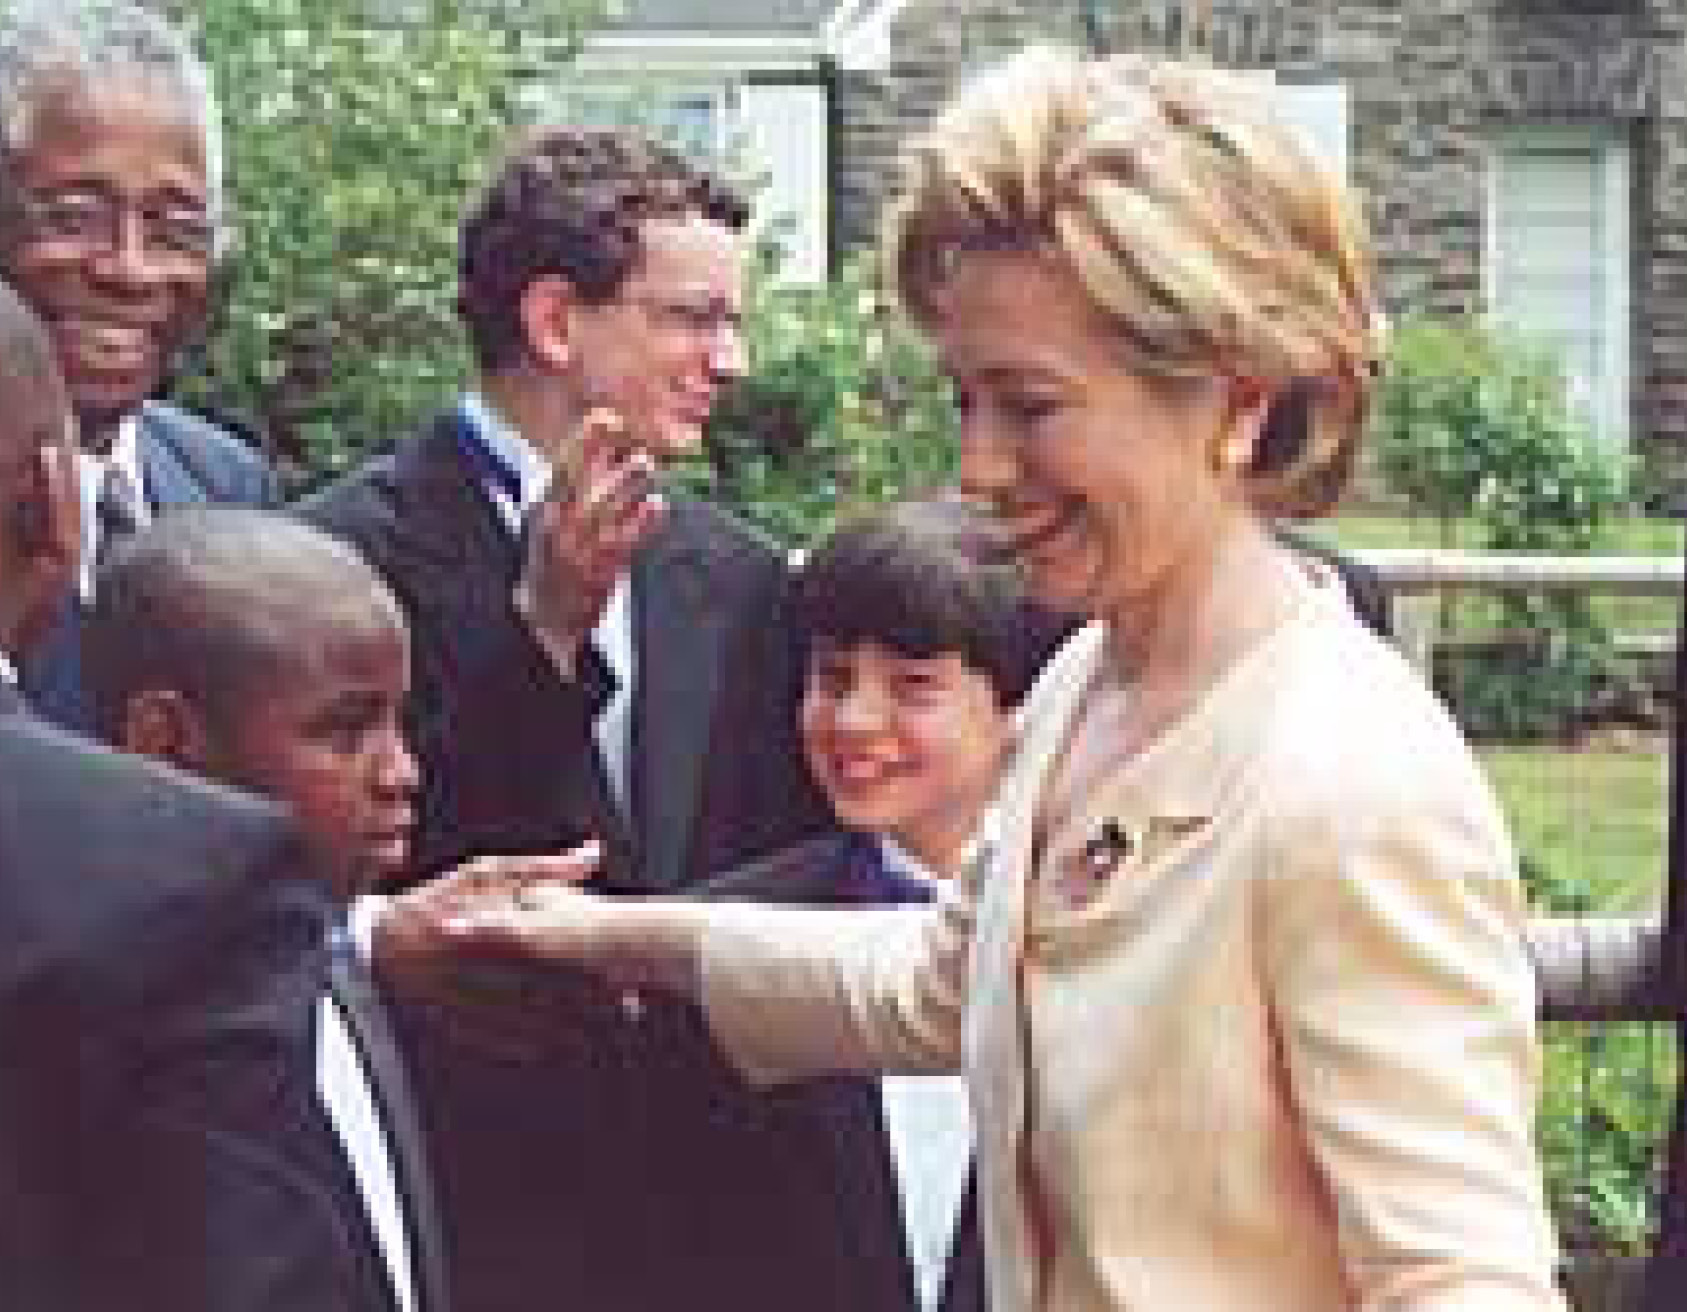 Senator Hillary Rodham Clinton with members of the Poughkeepsie Boys Choir